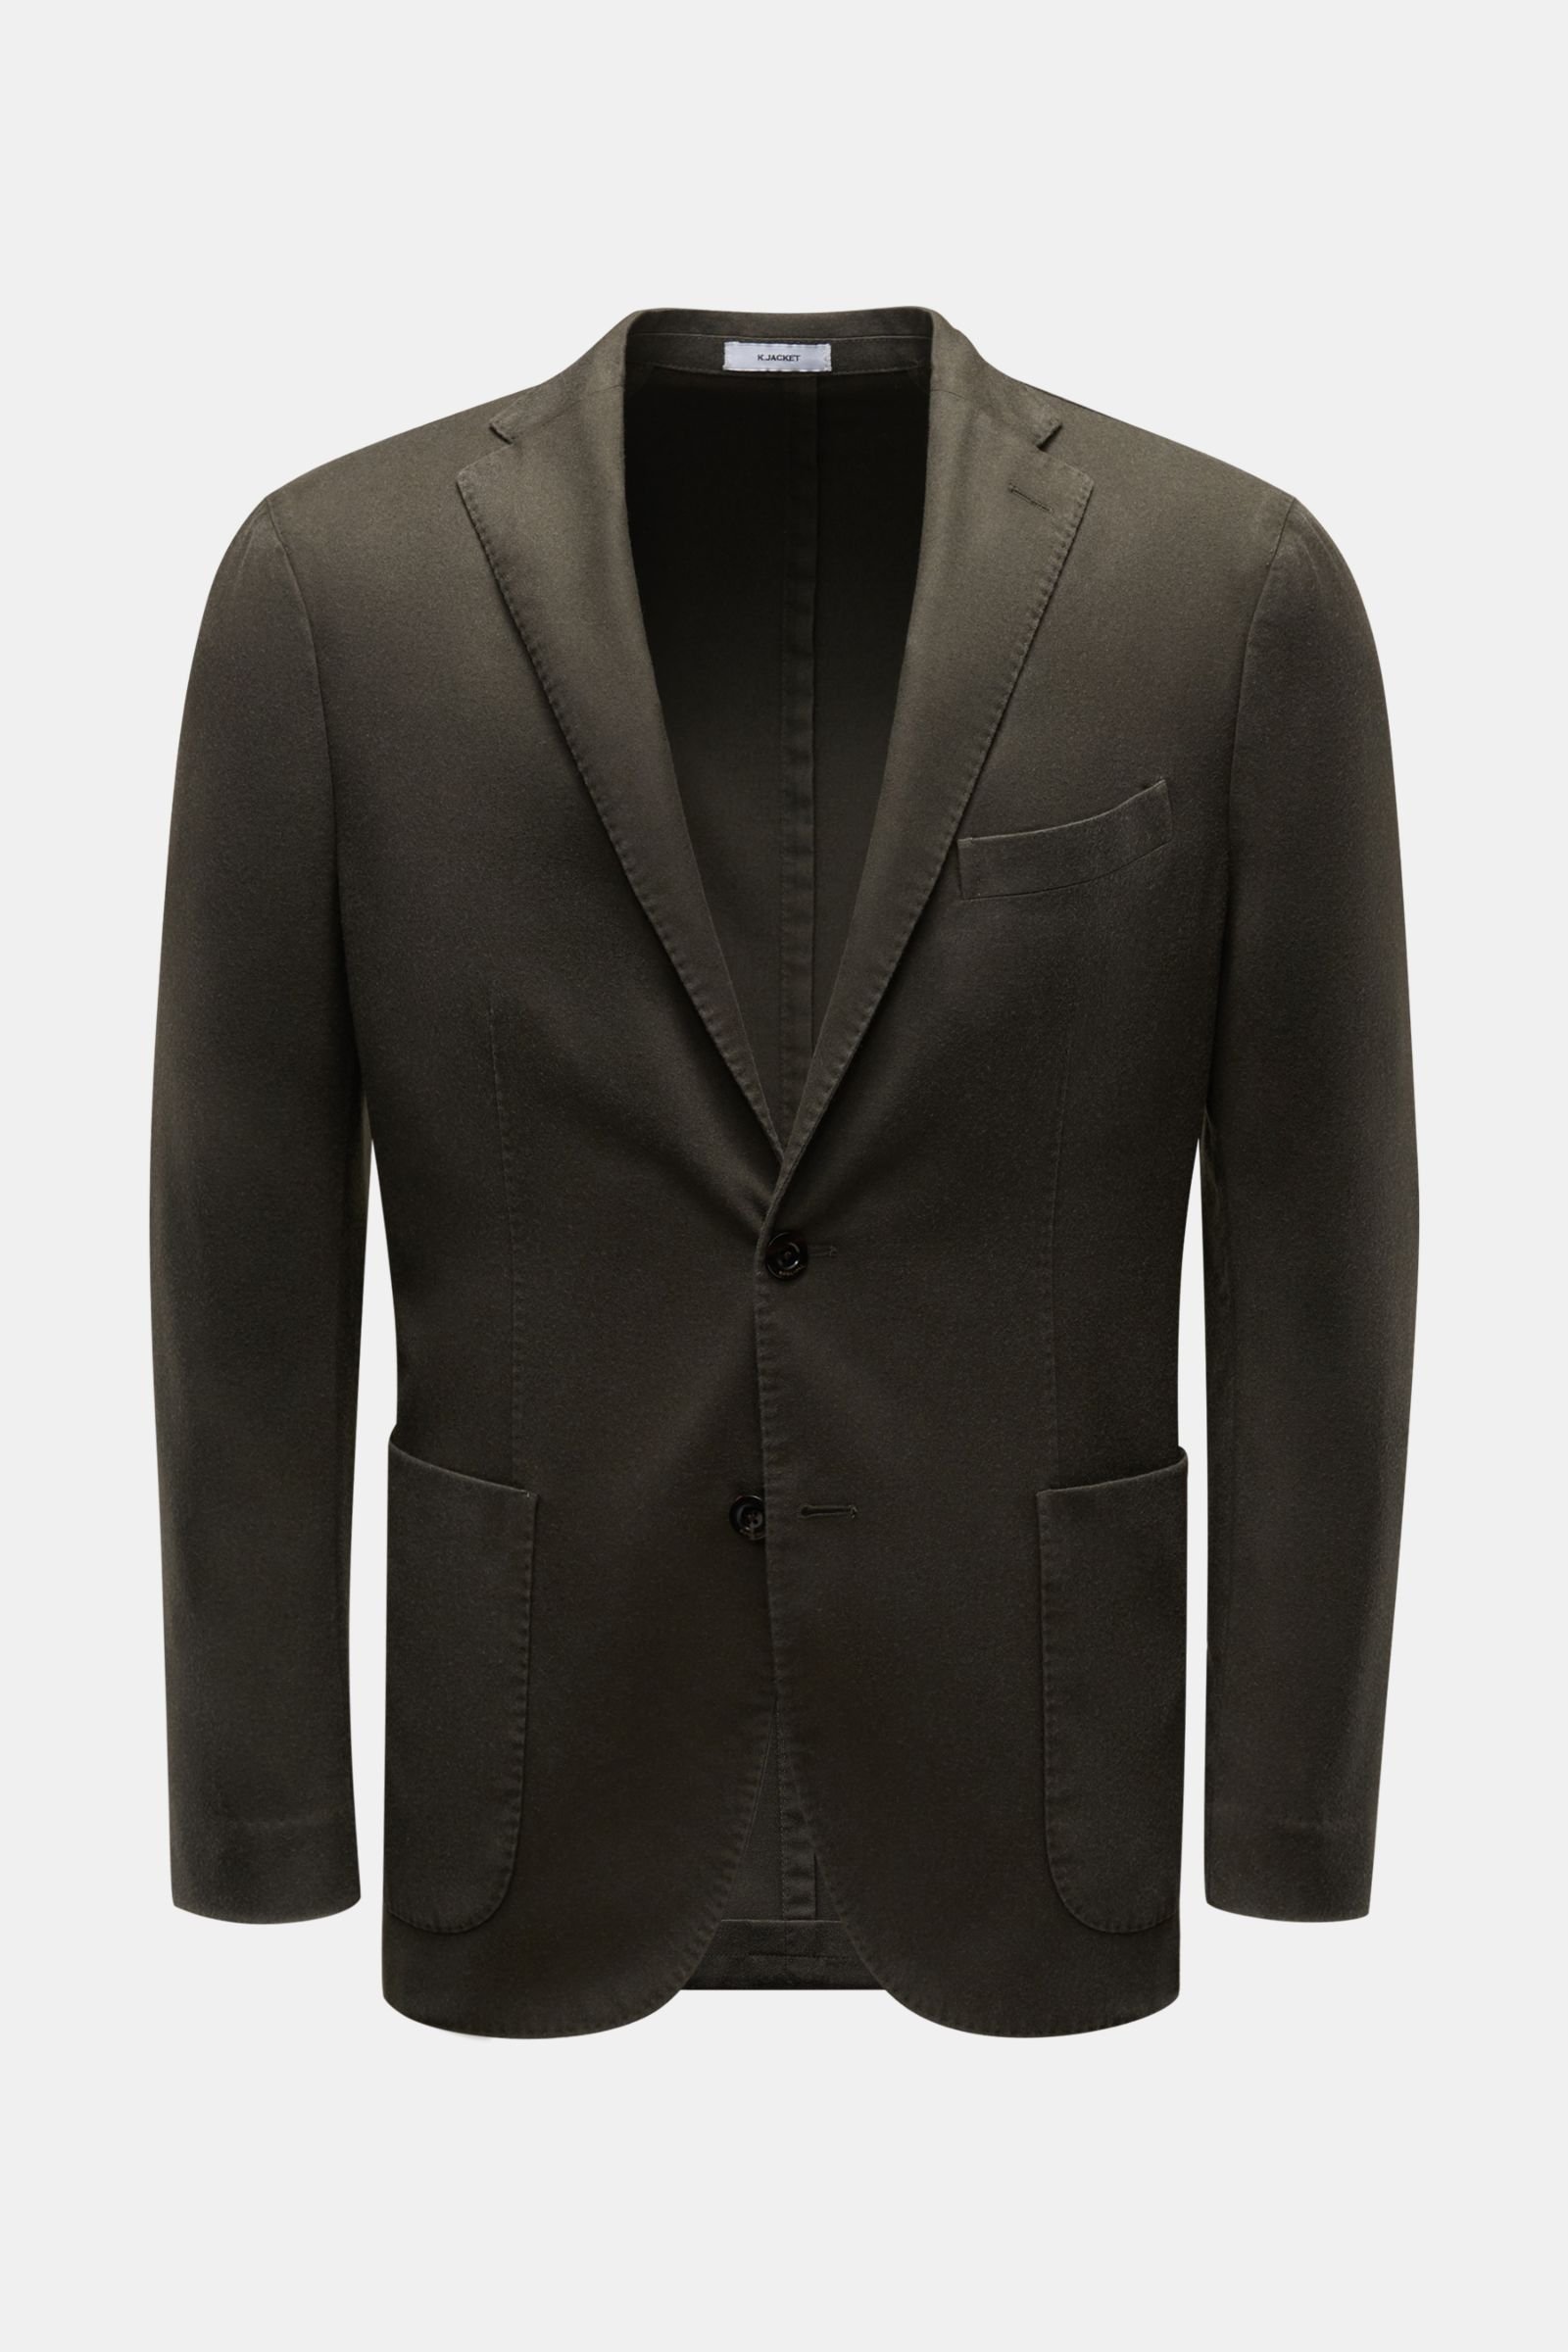 Smart-casual jacket 'K. Jacket' dark olive